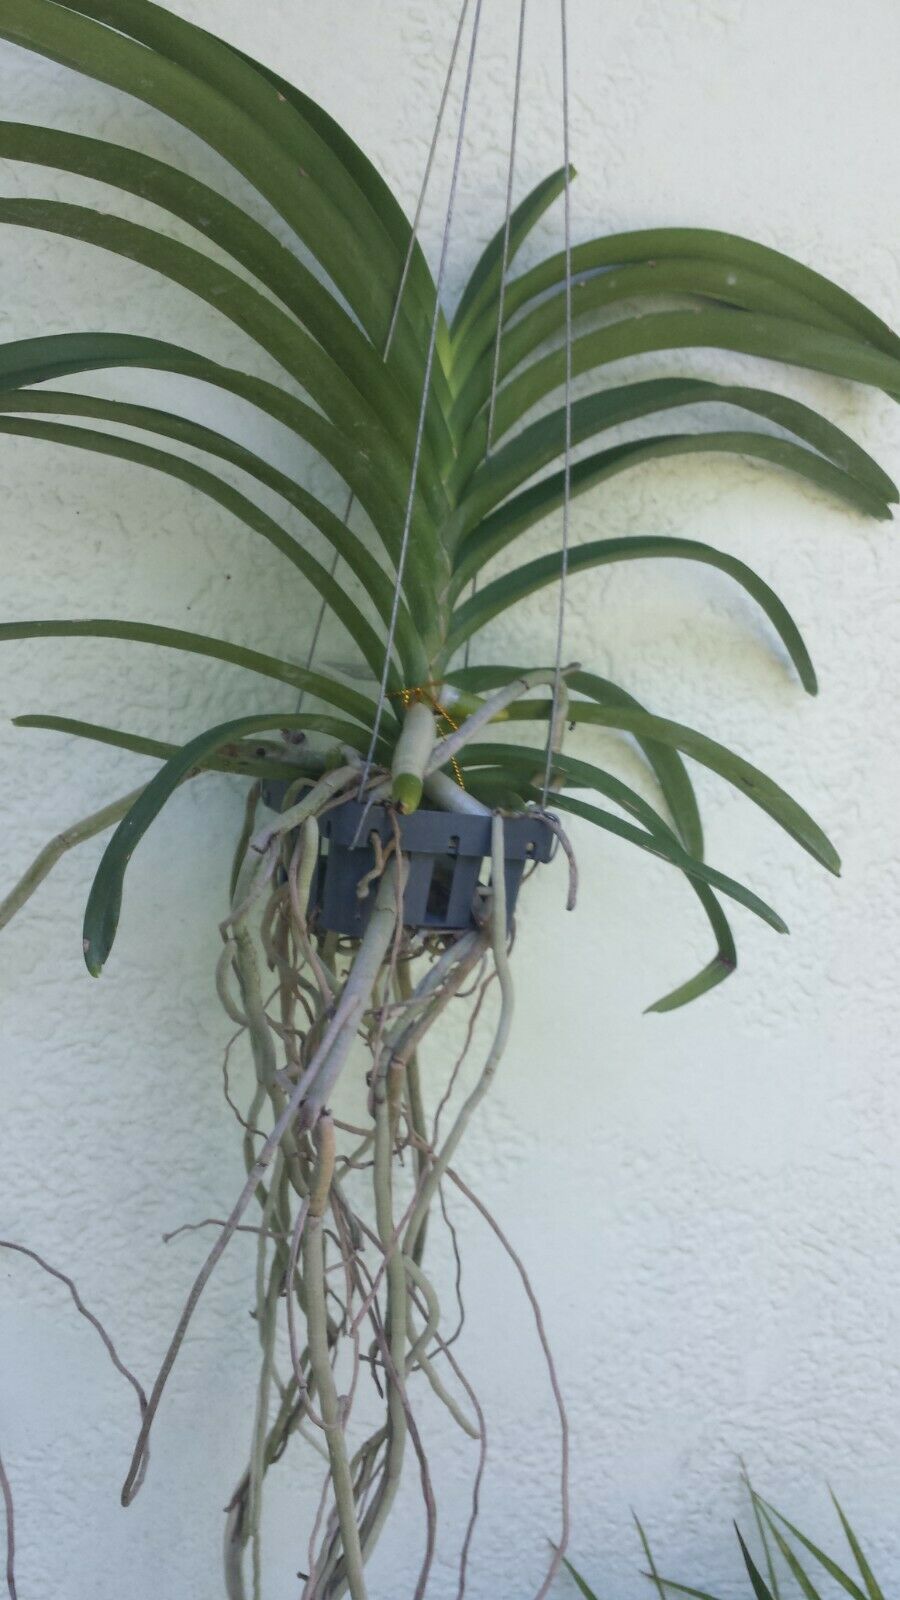 Vanda Ruth Graham Bell Tropical Plants